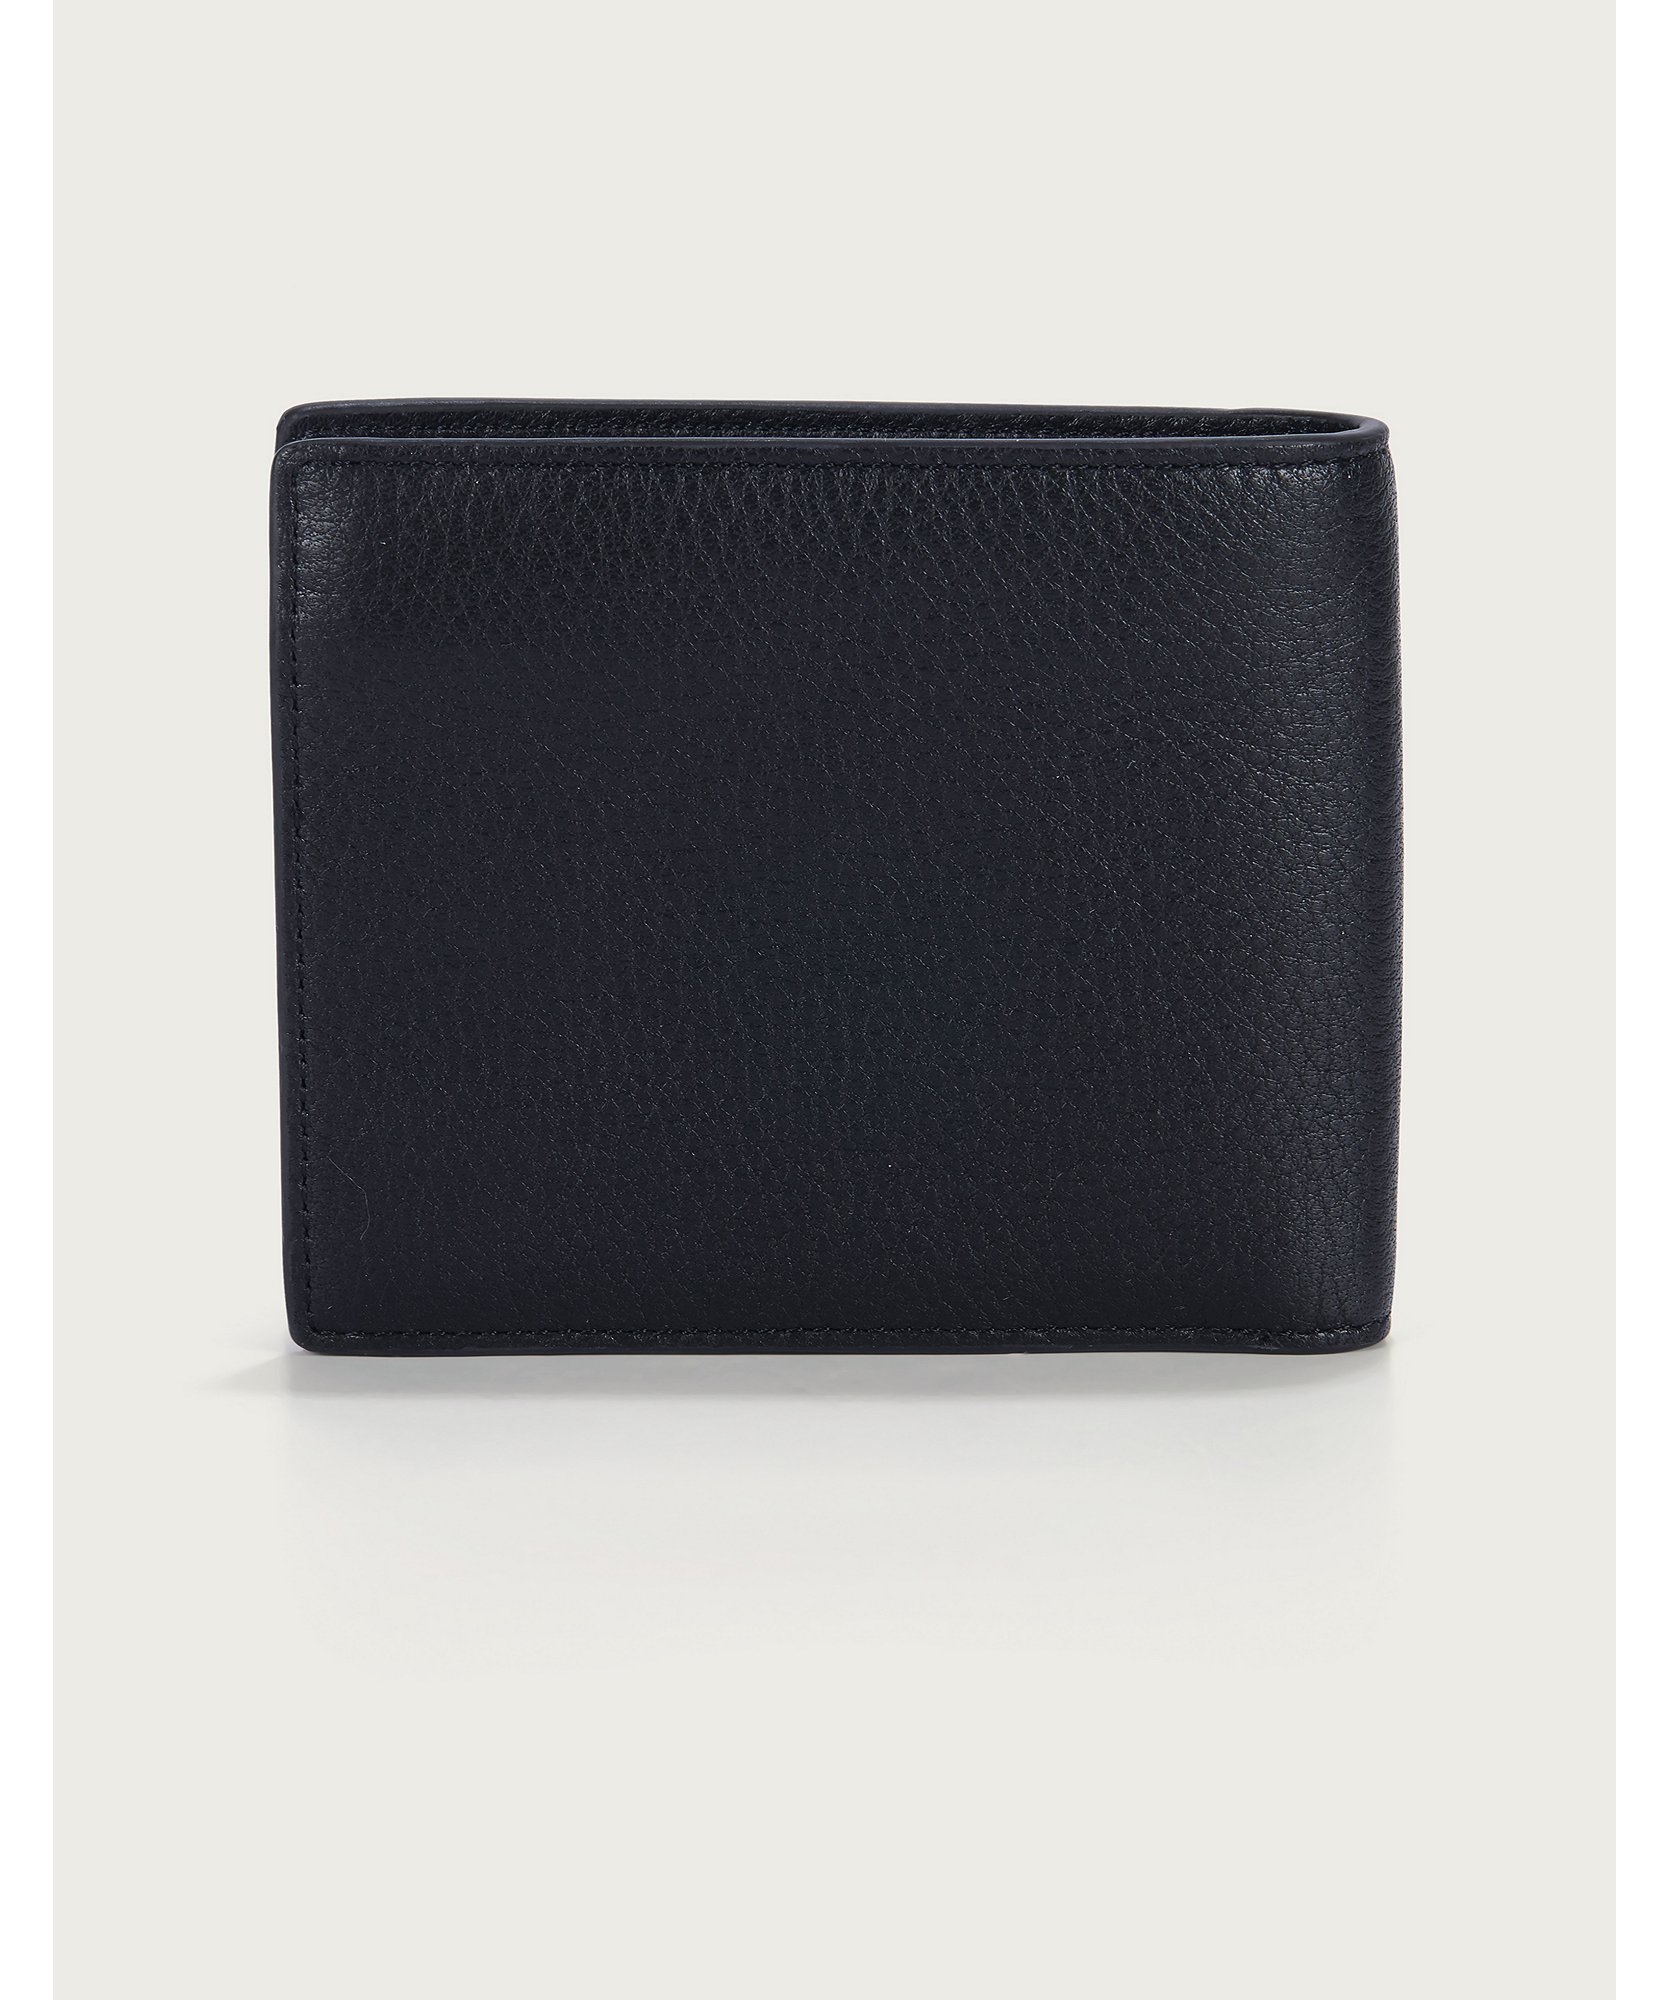 Men's Leather Bi-Fold Wallet | Accessories Sale | The White Company UK